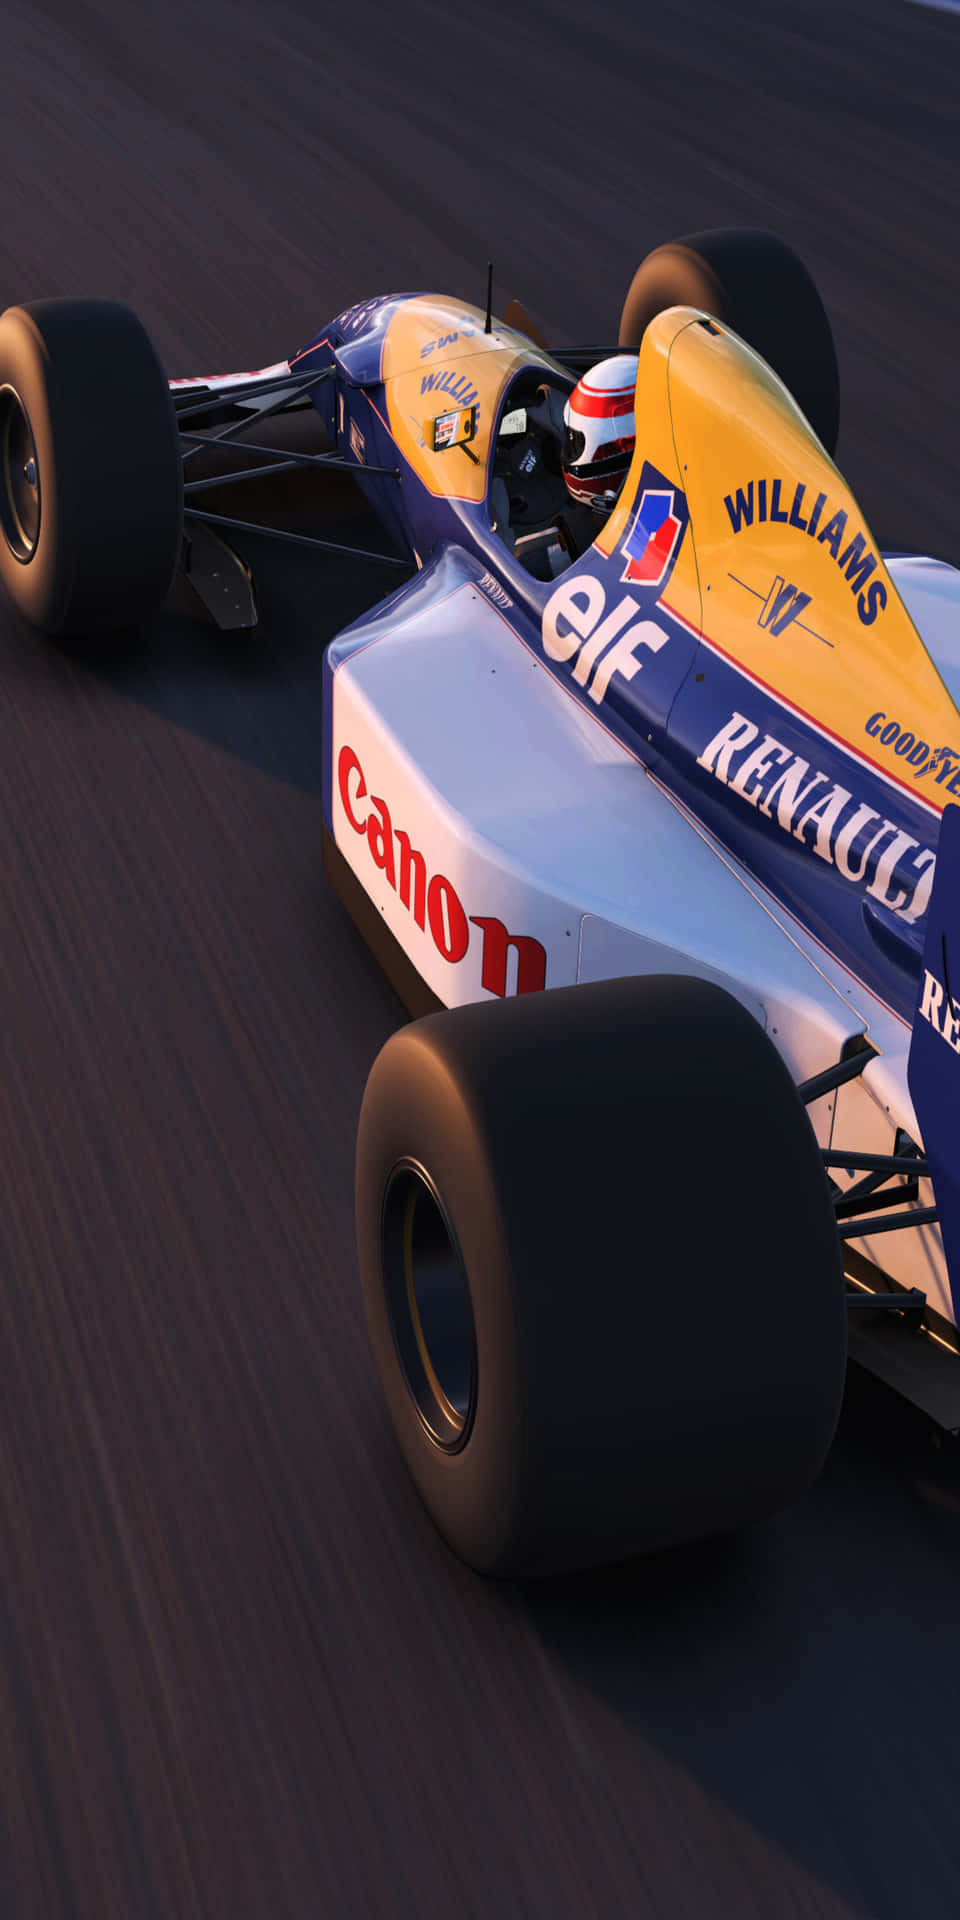 Williams Fw14 Pixel 3 F1 2016 Background